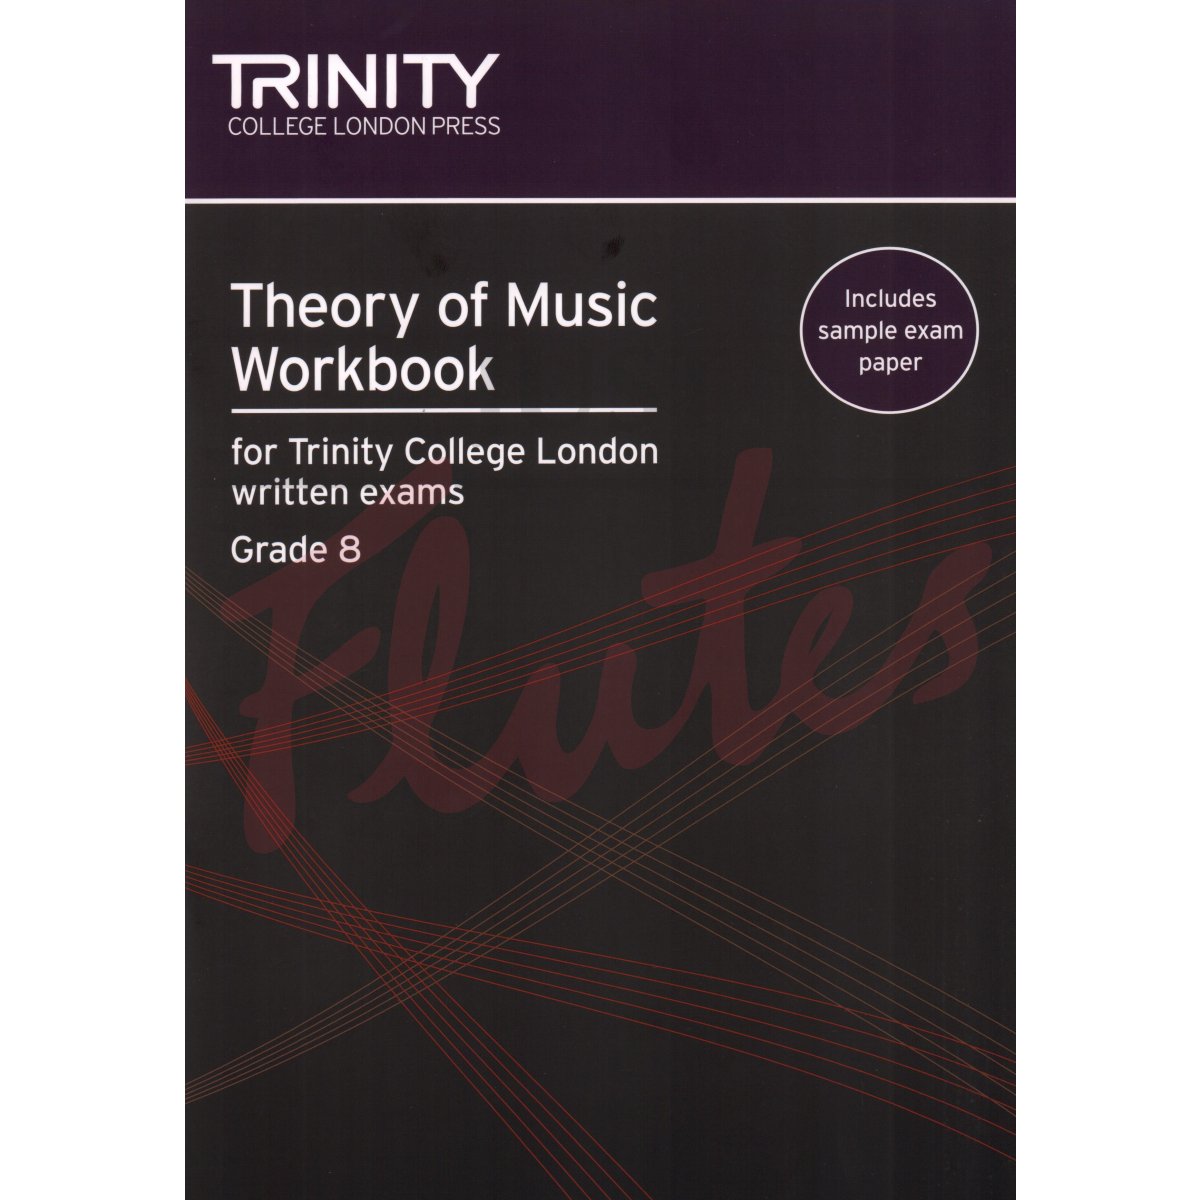 Theory of Music Workbook, Grade 8